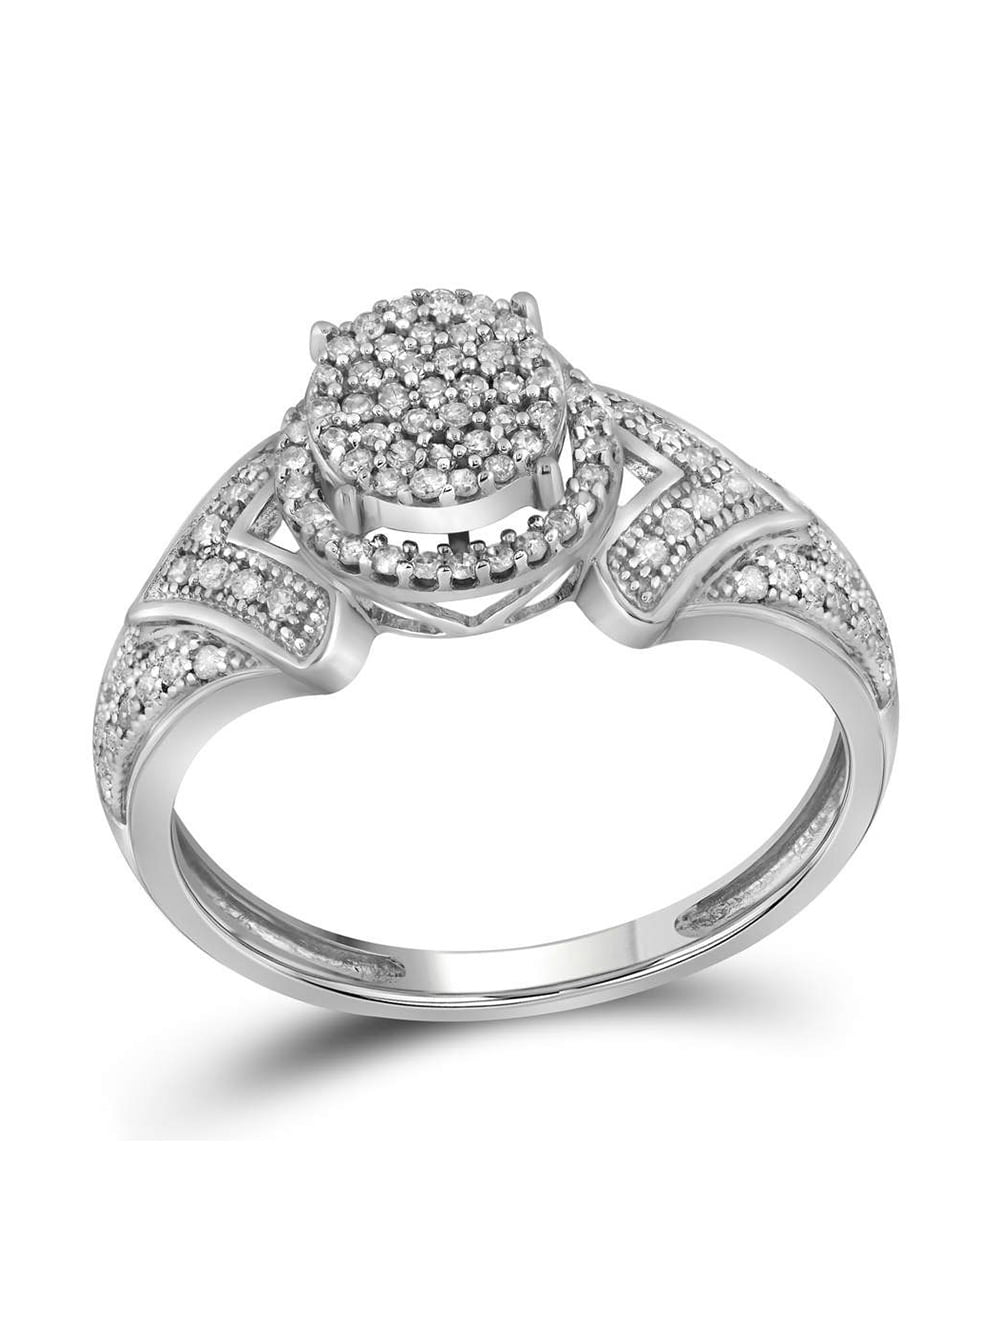 Details about   Ladies Marquise Diamond Wedding Bridal Engagement Ring Set 14K White Gold Finish 